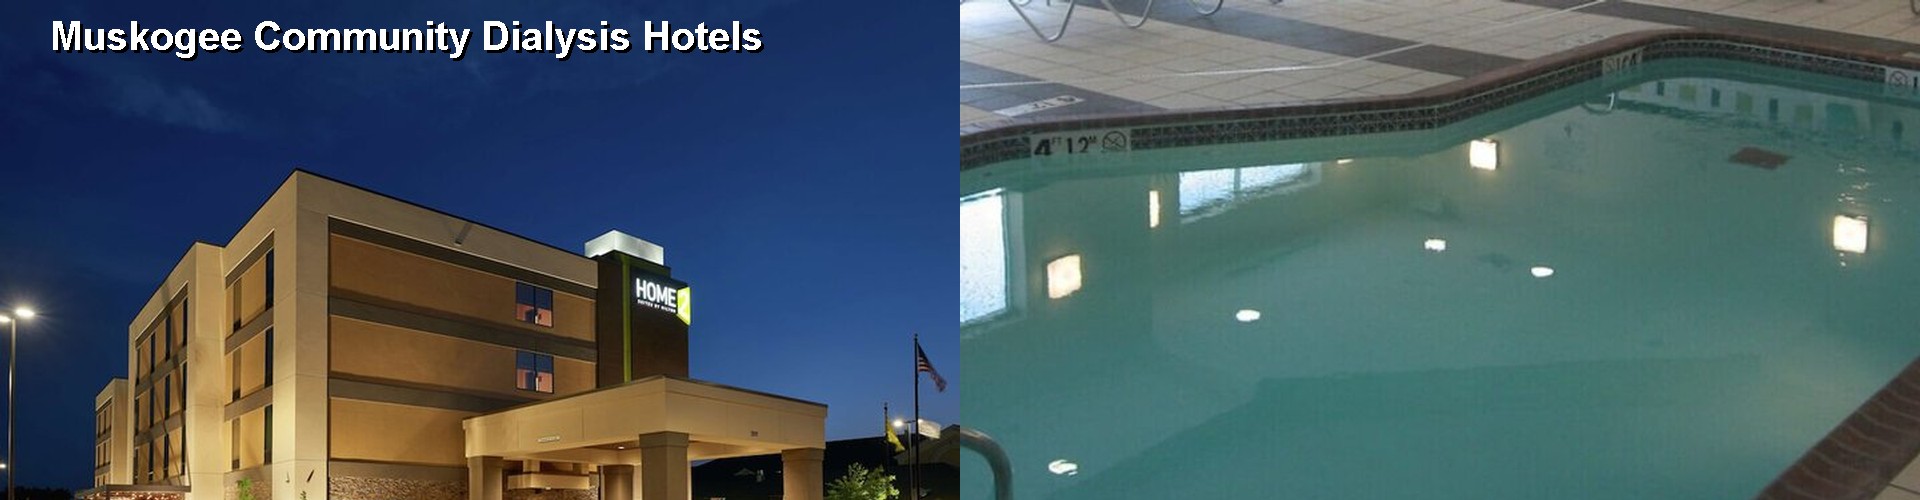 5 Best Hotels near Muskogee Community Dialysis